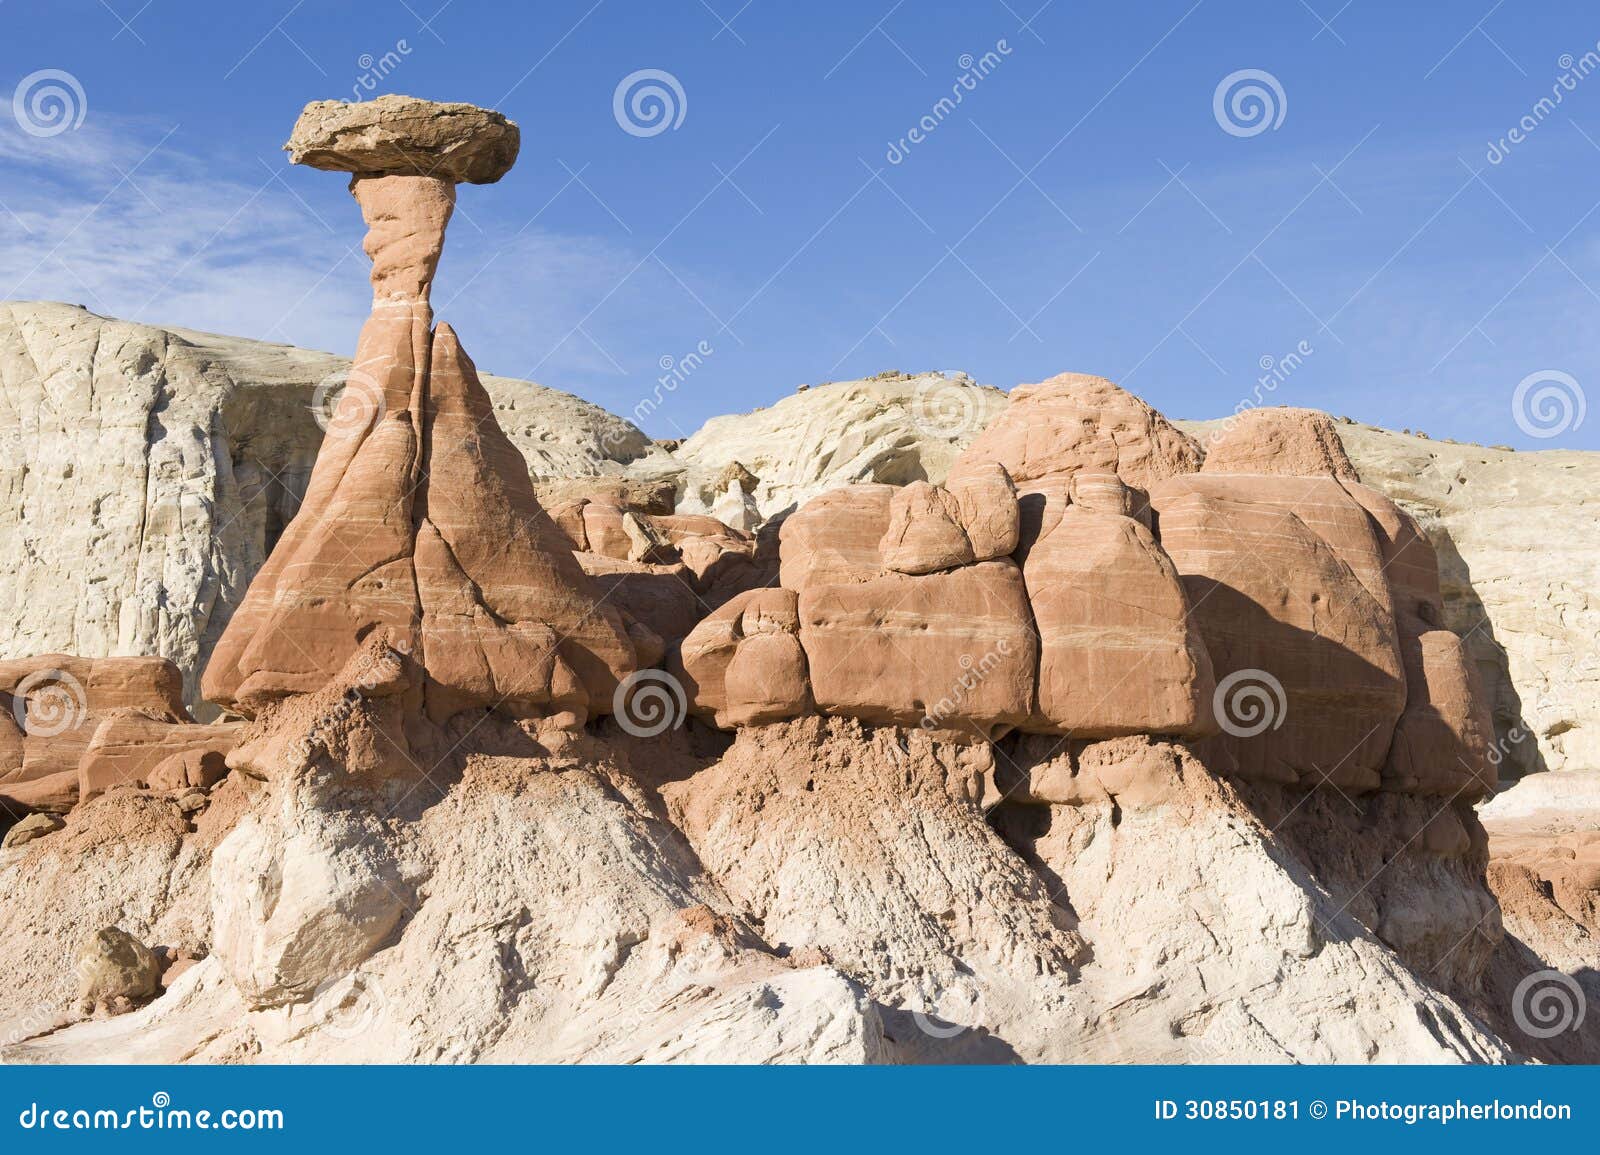 hoodoo and paria rimrocks in the vermillion cliffs utah usa